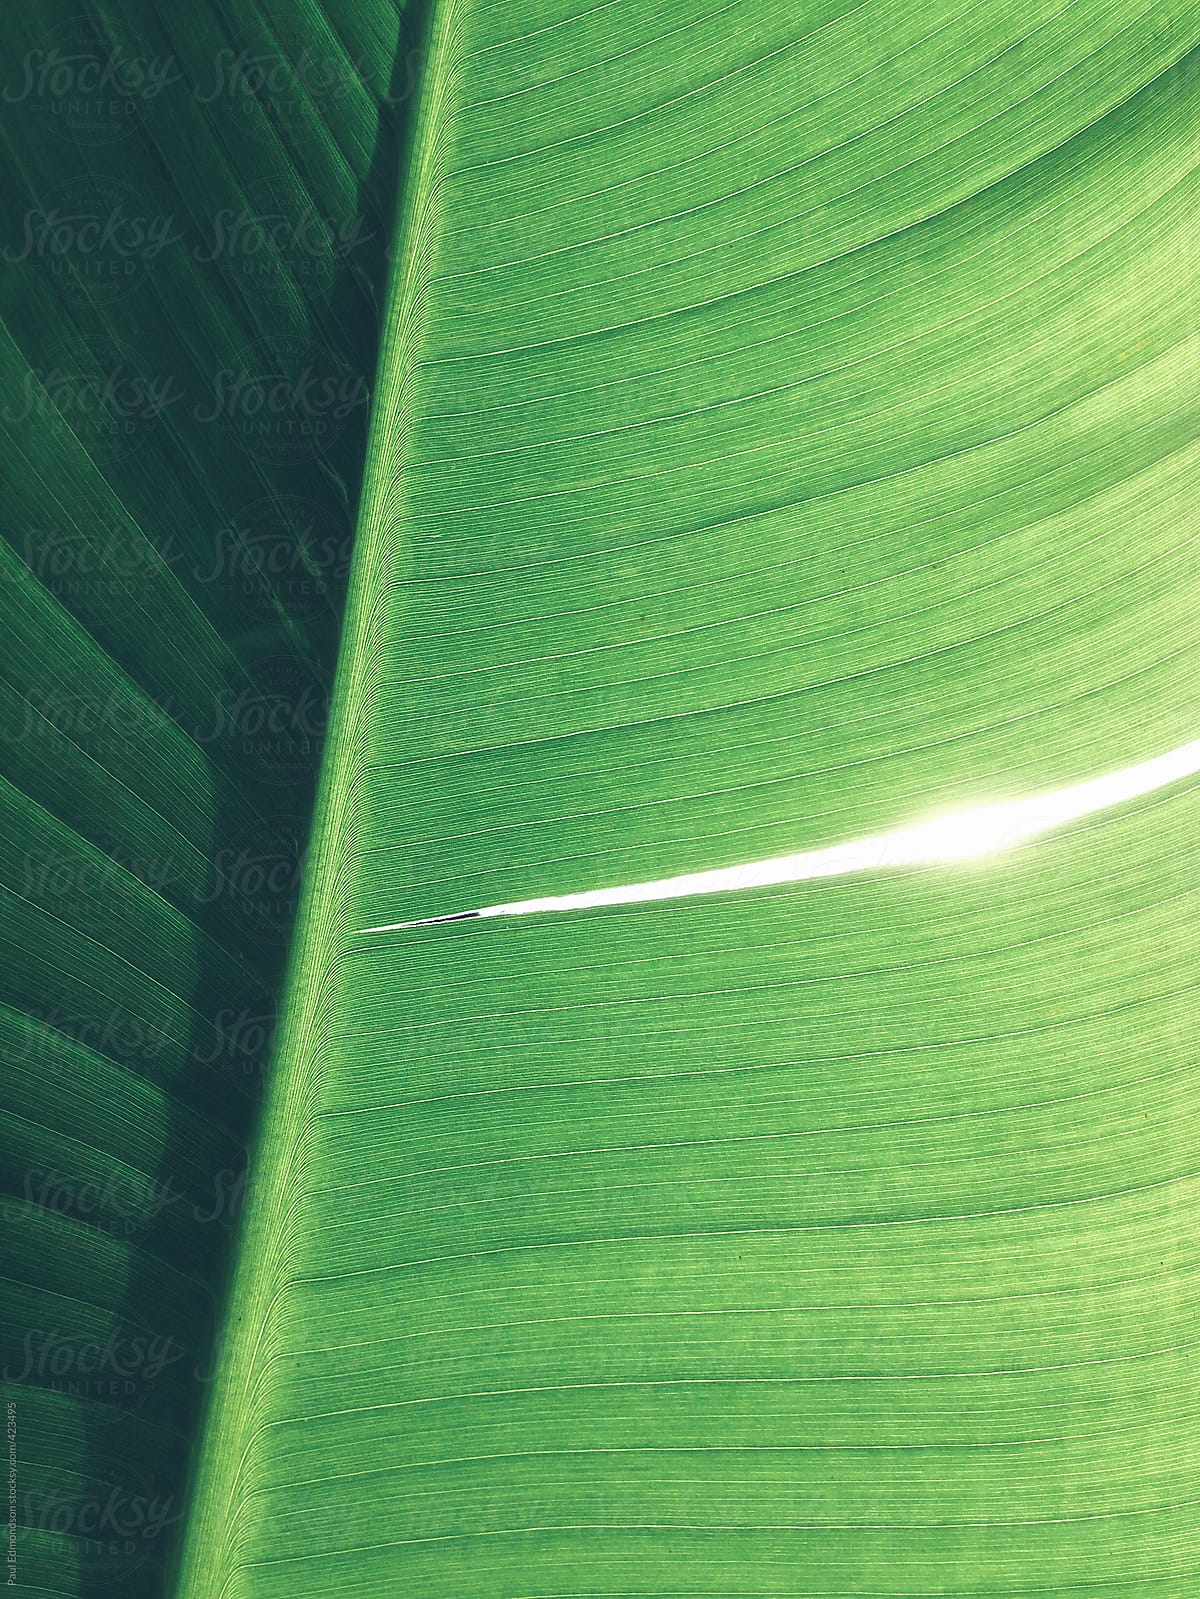 Close up of banana leaf, sunlight shining through small crack